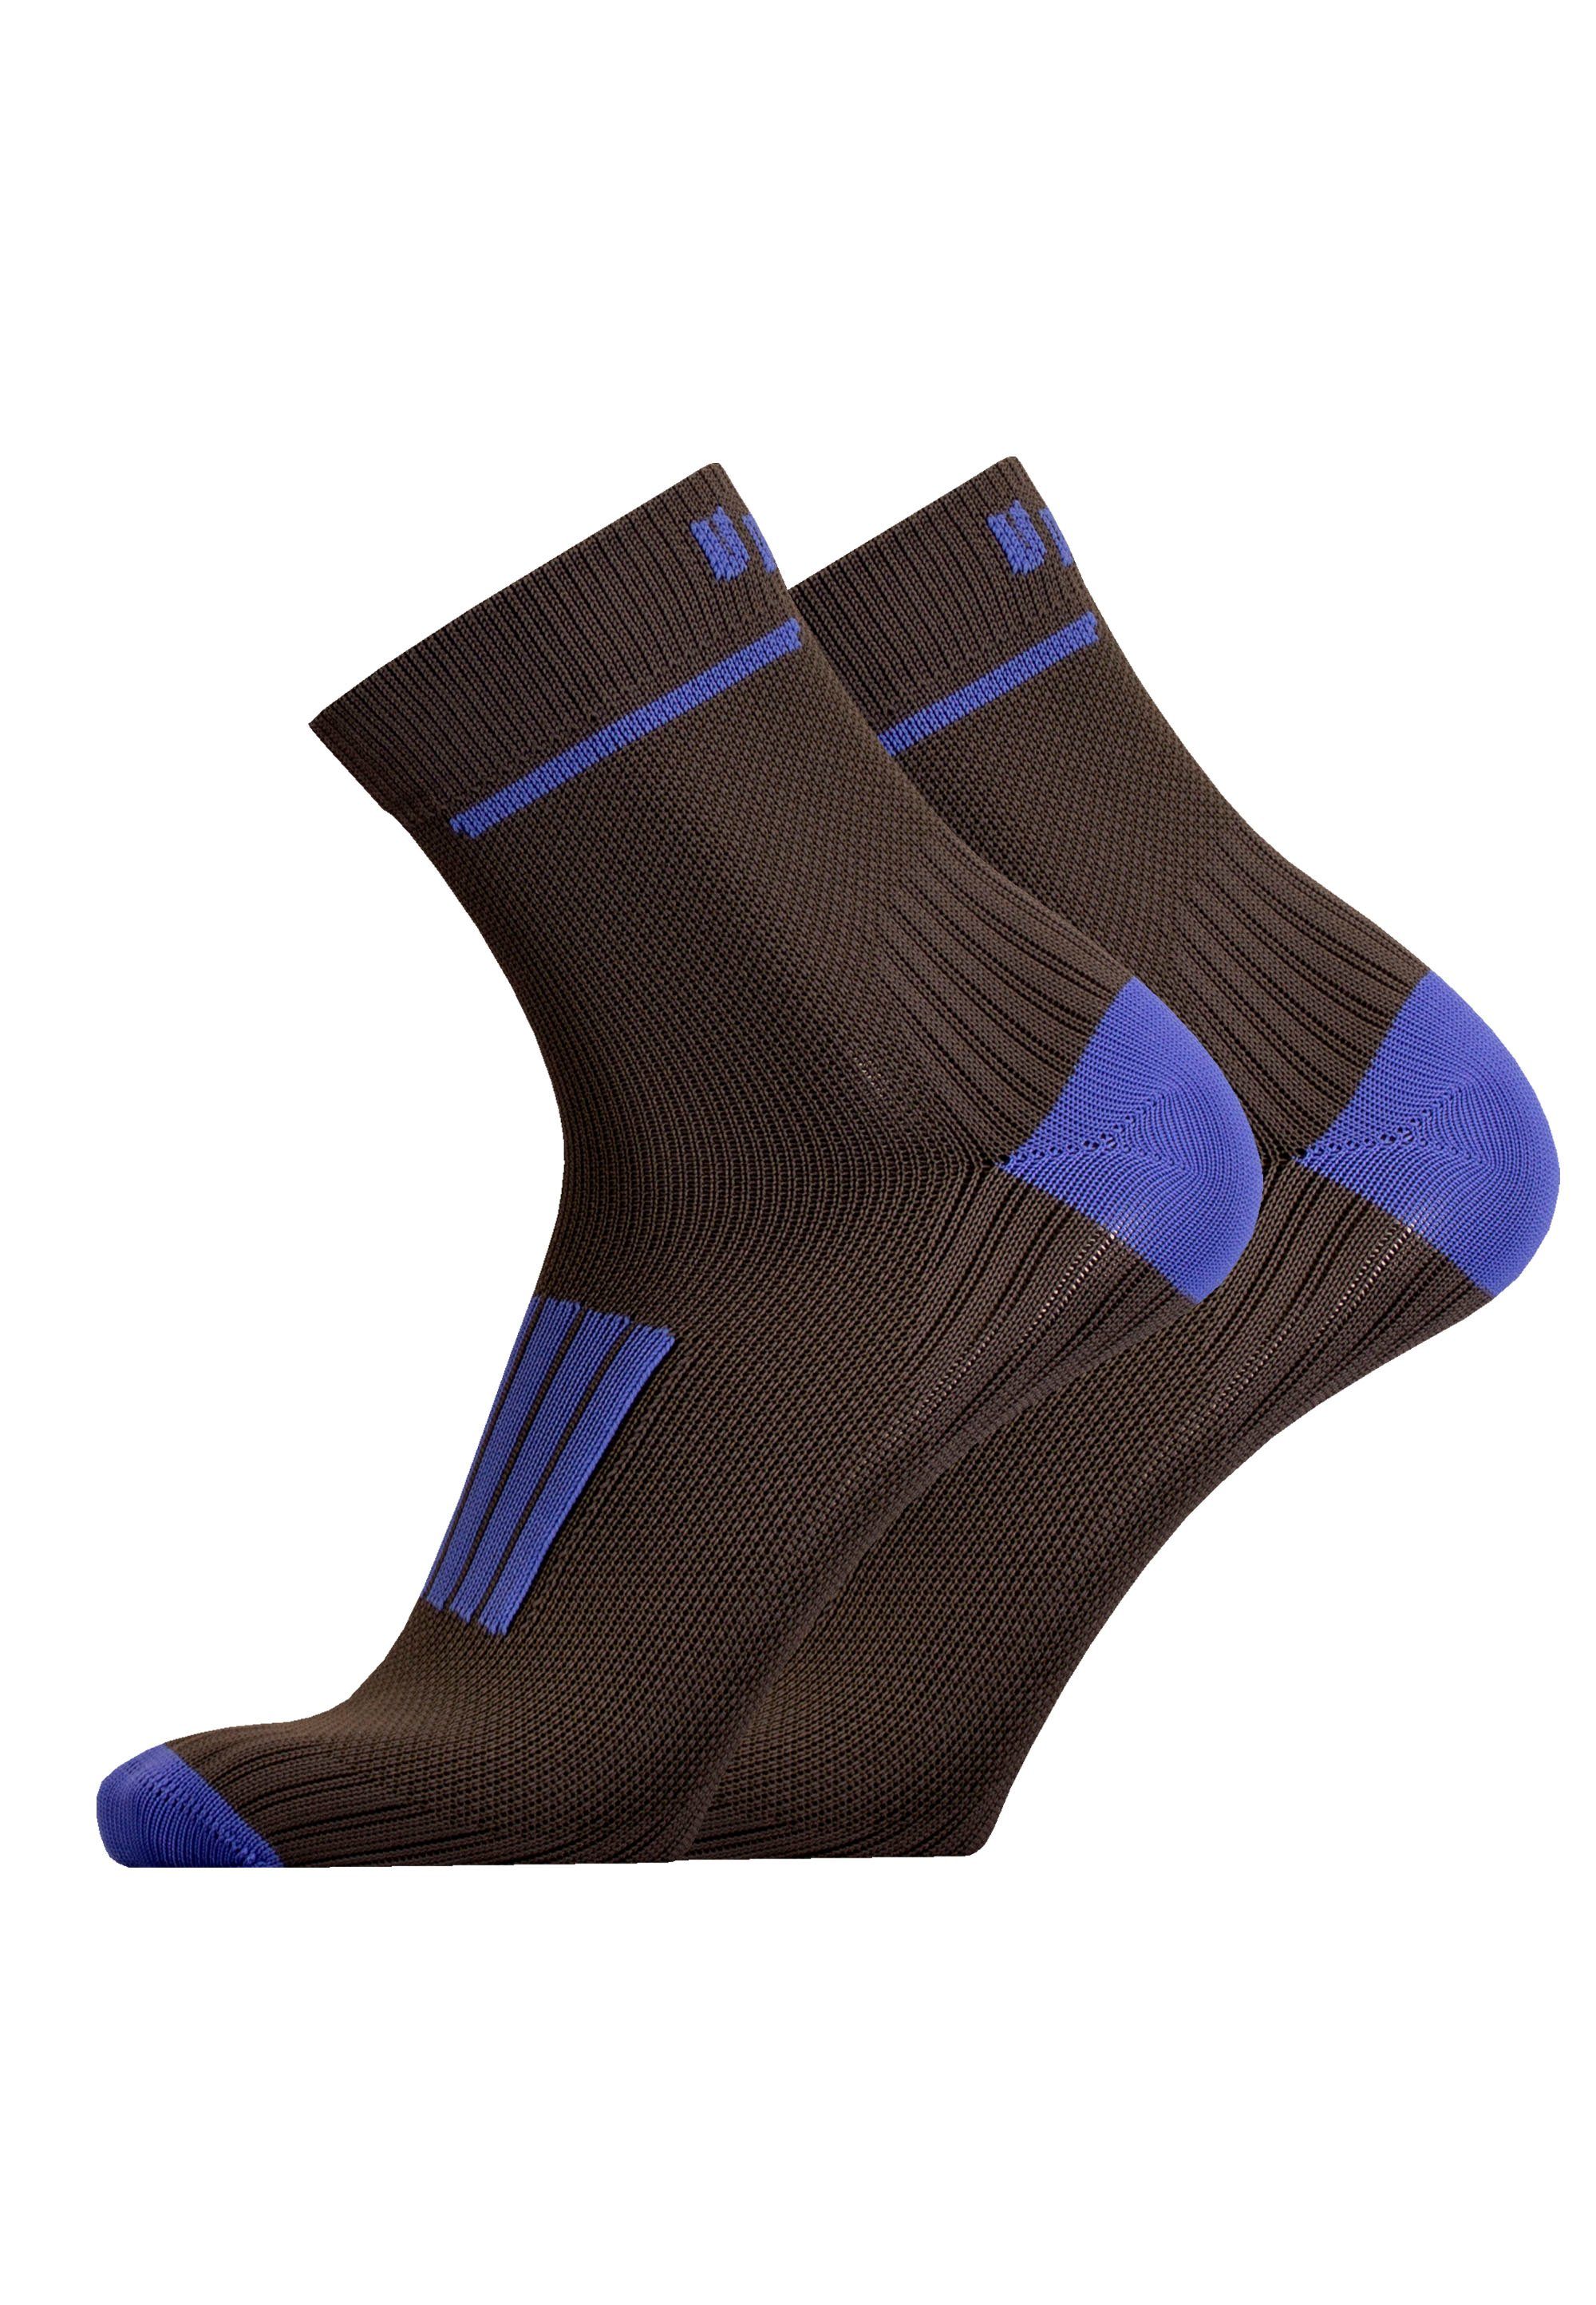 UphillSport Socken FRONT 2er Pack (2-Paar) mit gepolstertem Rist grau-blau